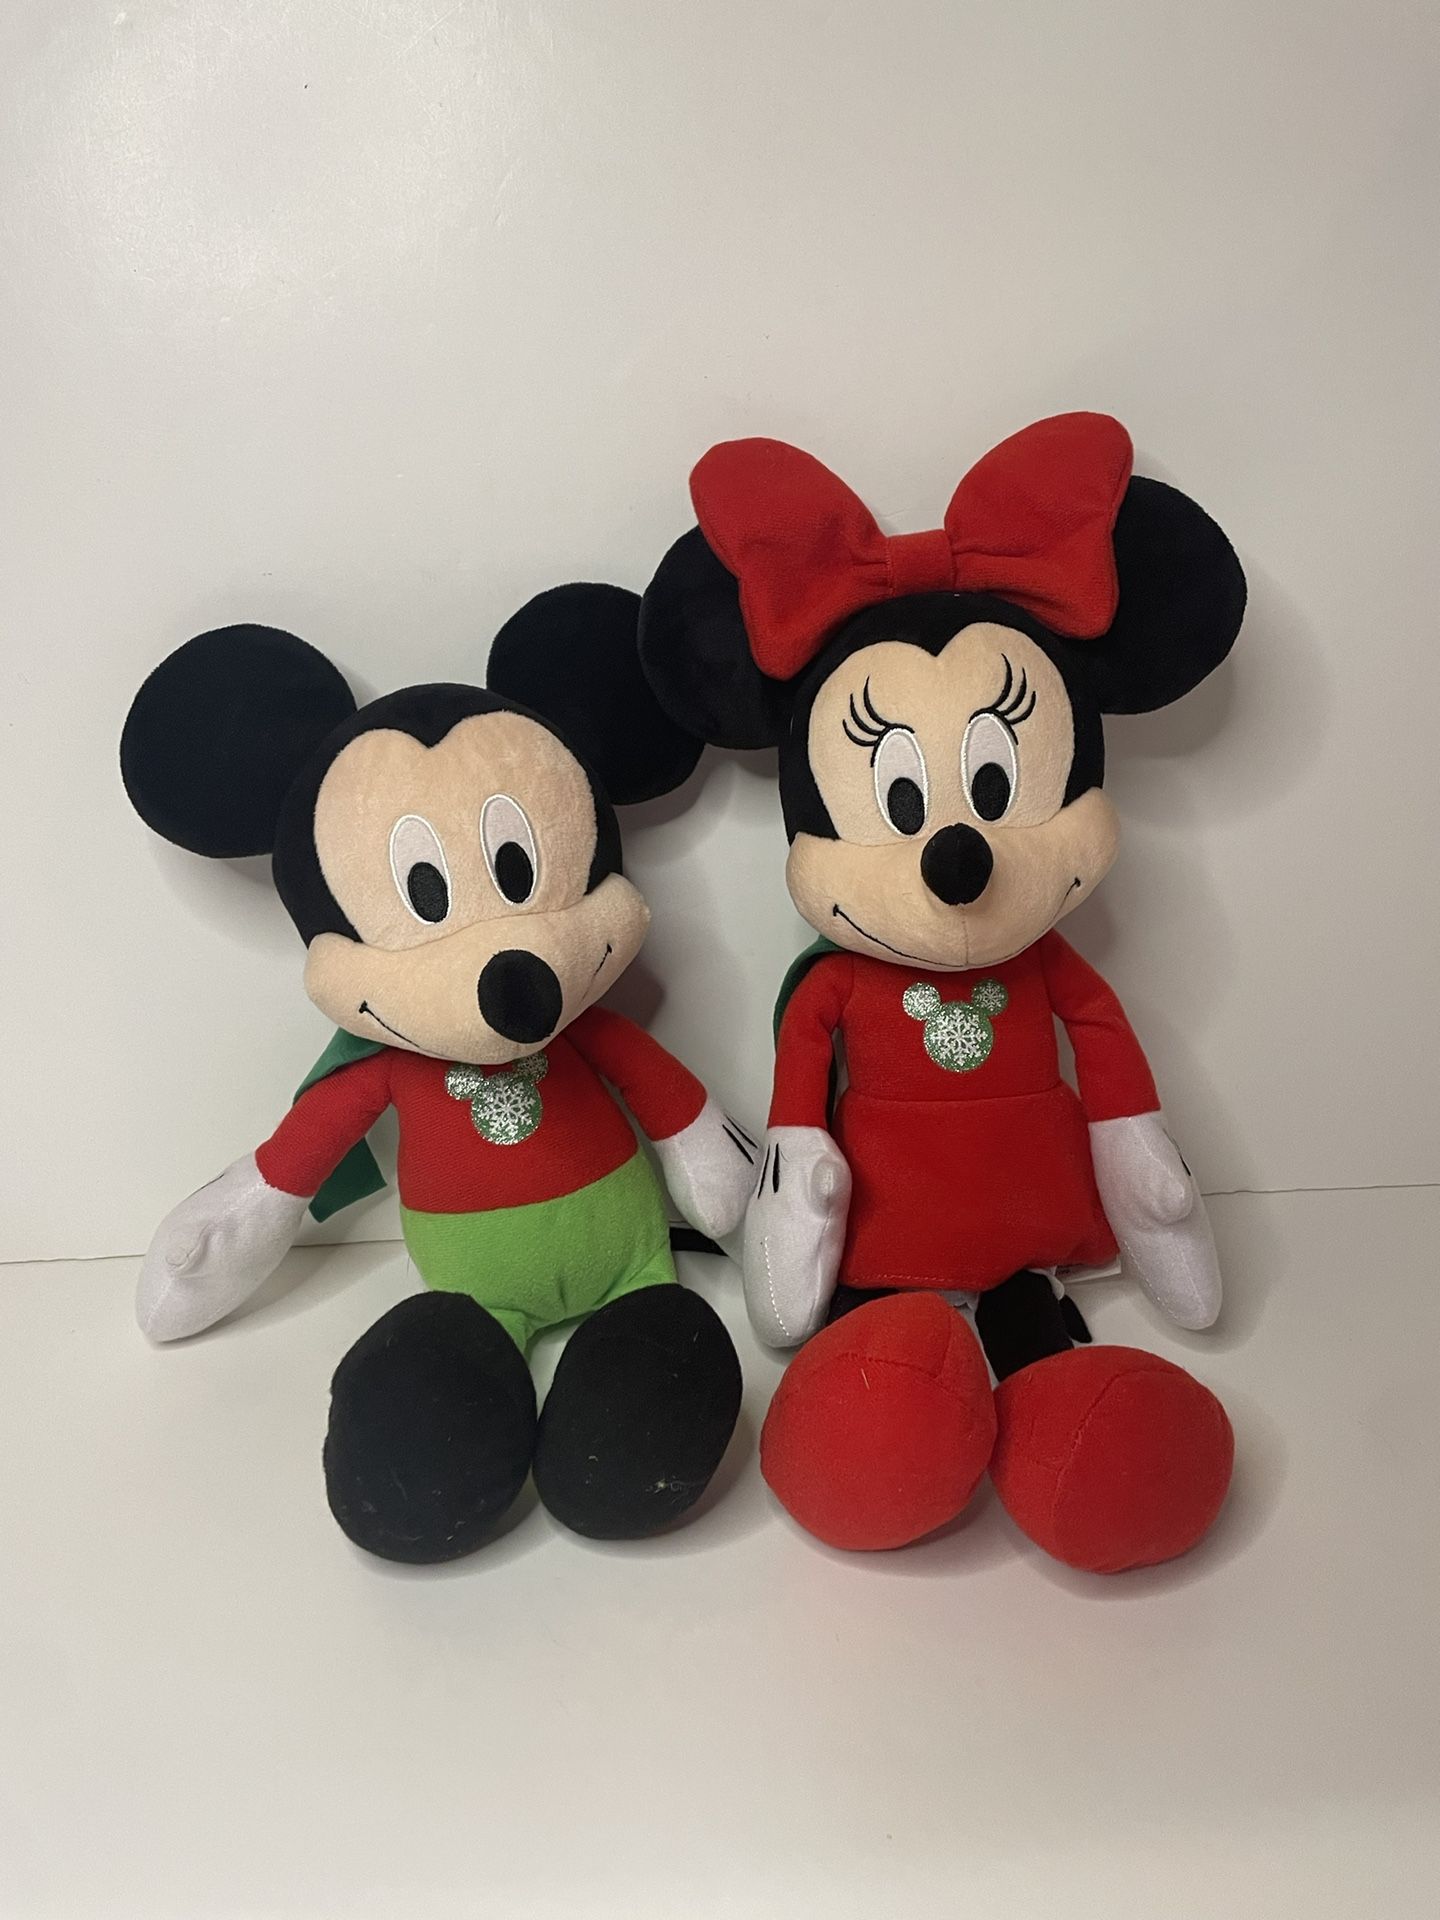 Christmas Mickey and Minnie plushy’s